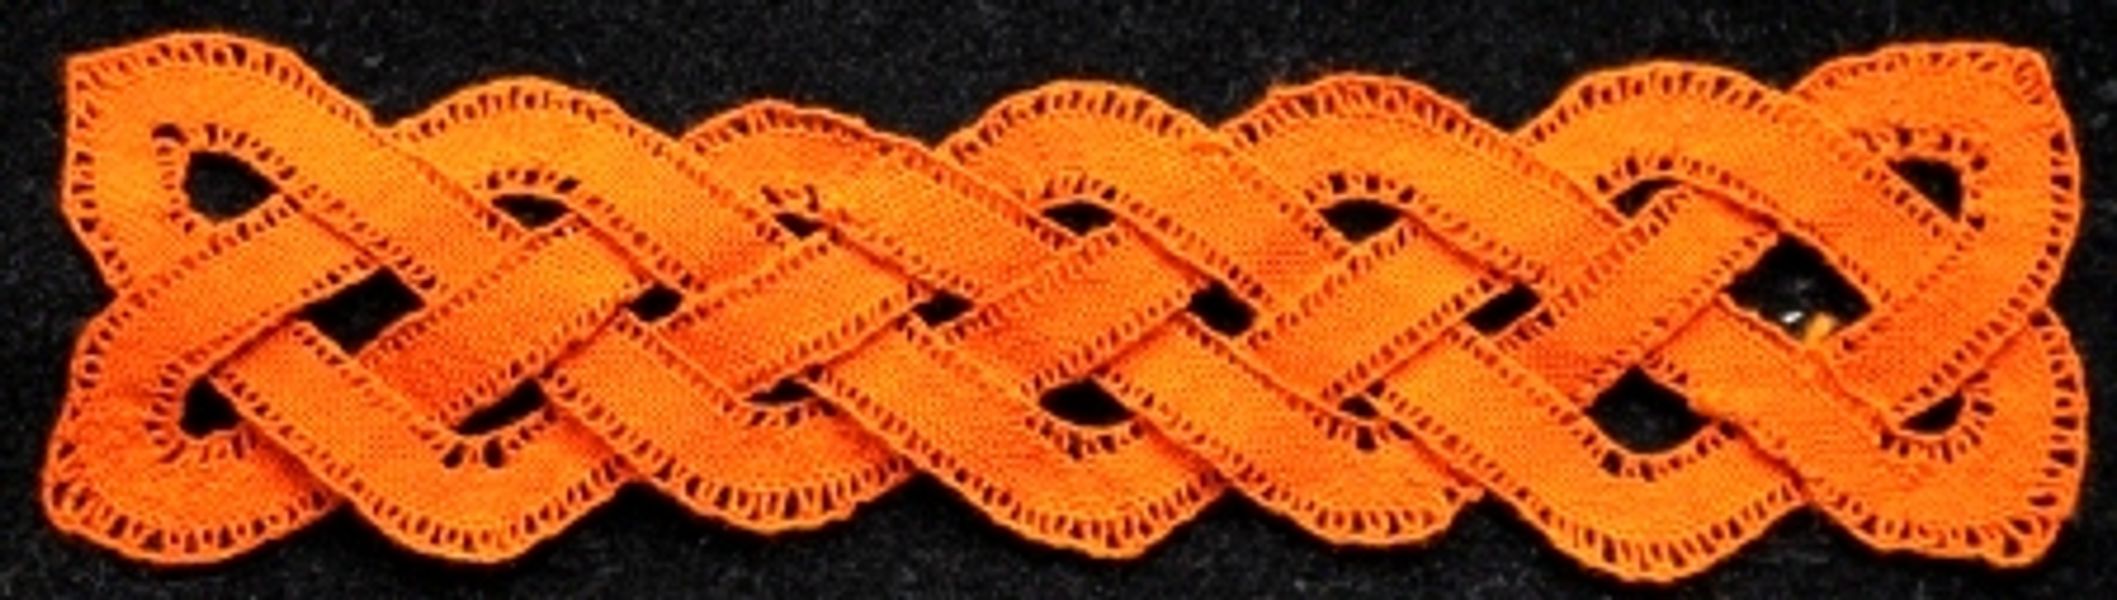 Whole Stitch Lace - Celtic Knot